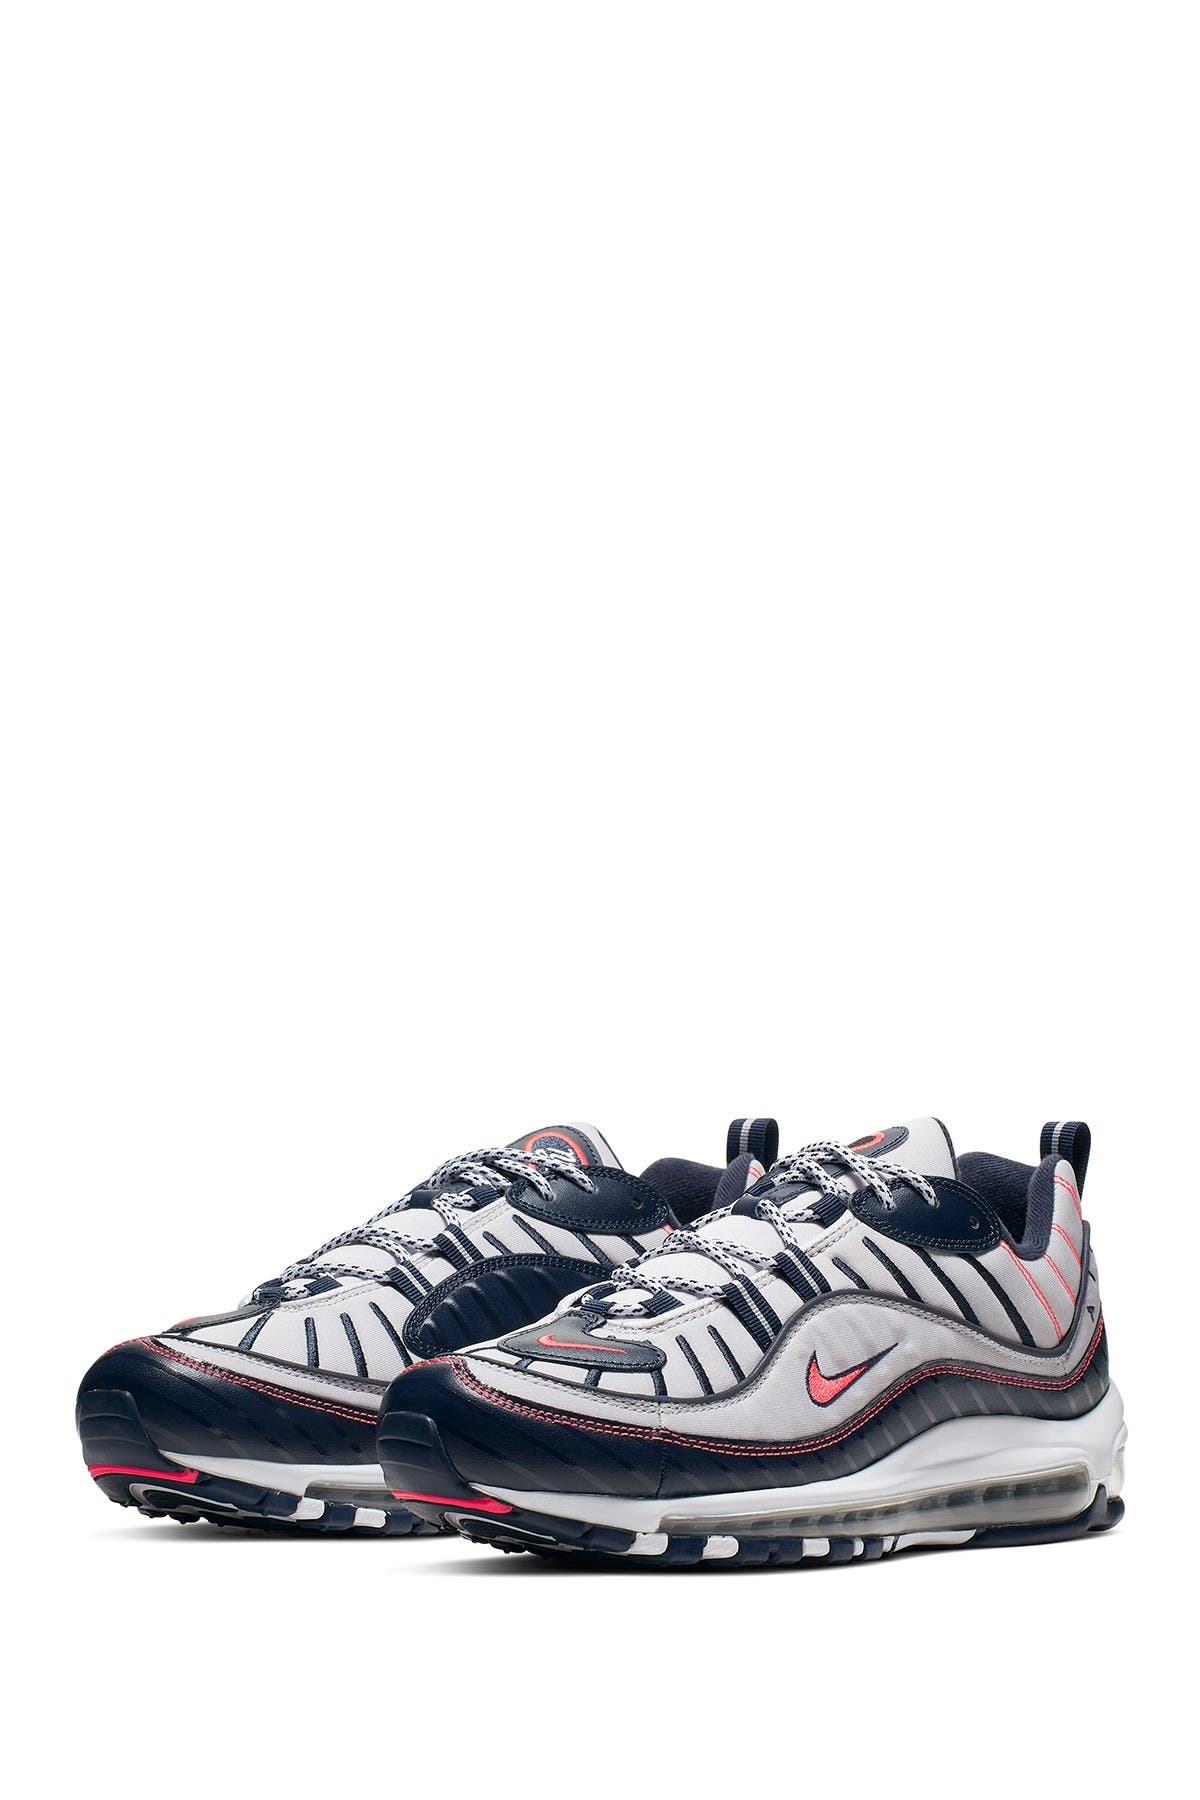 Nike | Air Max '98 Running Shoe 